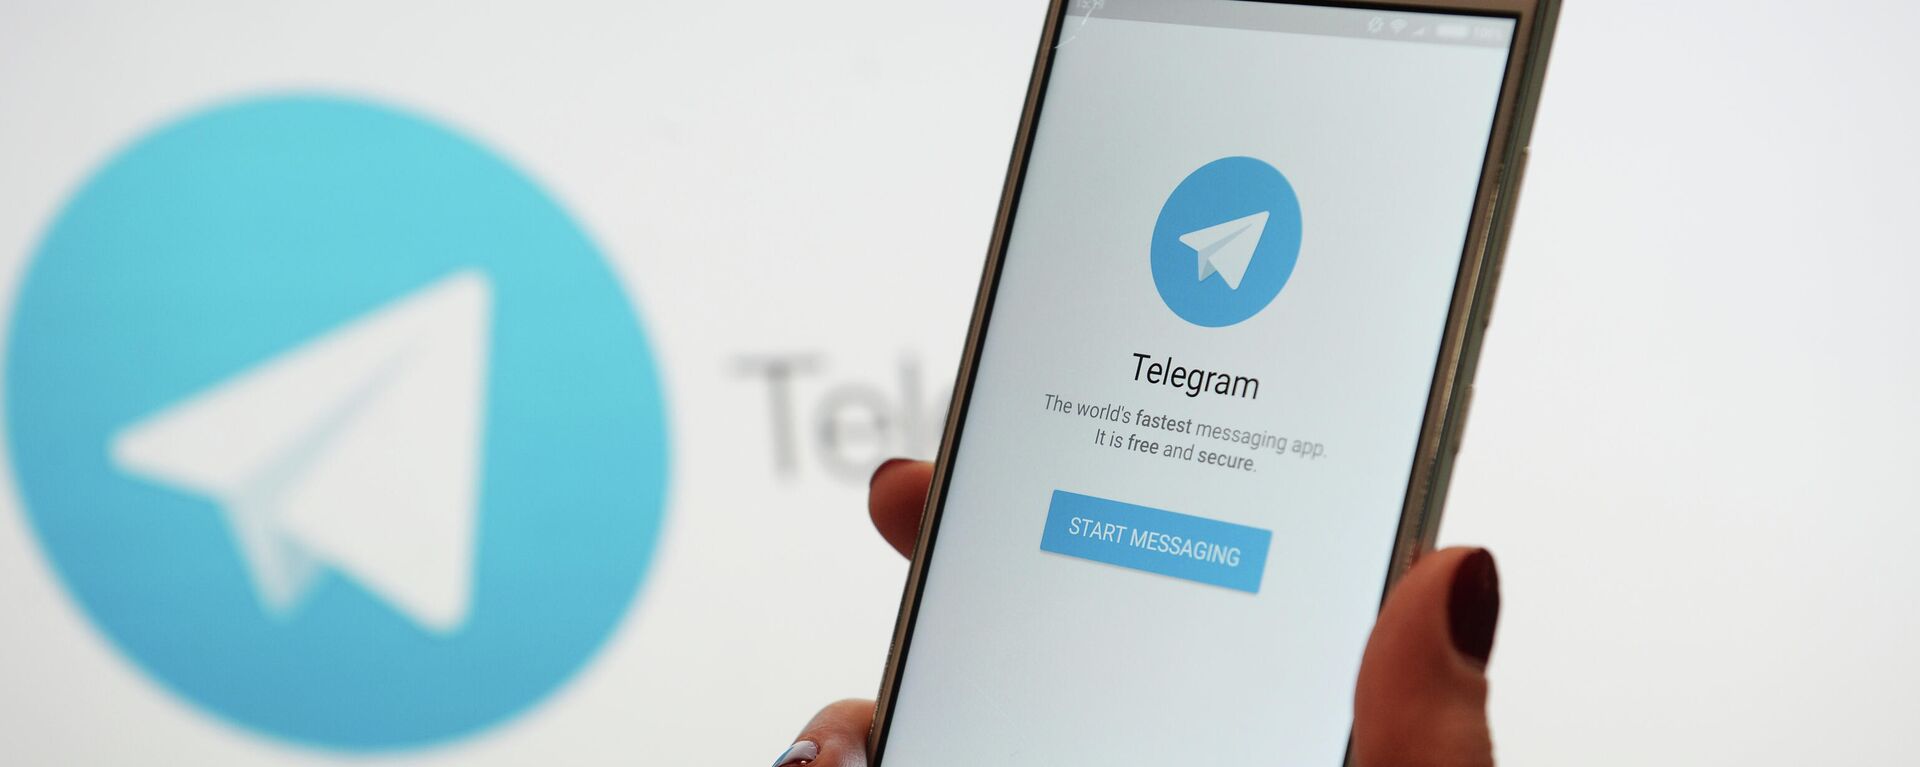 Una persona sostiene un teléfono con la 'app' Telegram en la pantalla - Sputnik Mundo, 1920, 12.01.2022